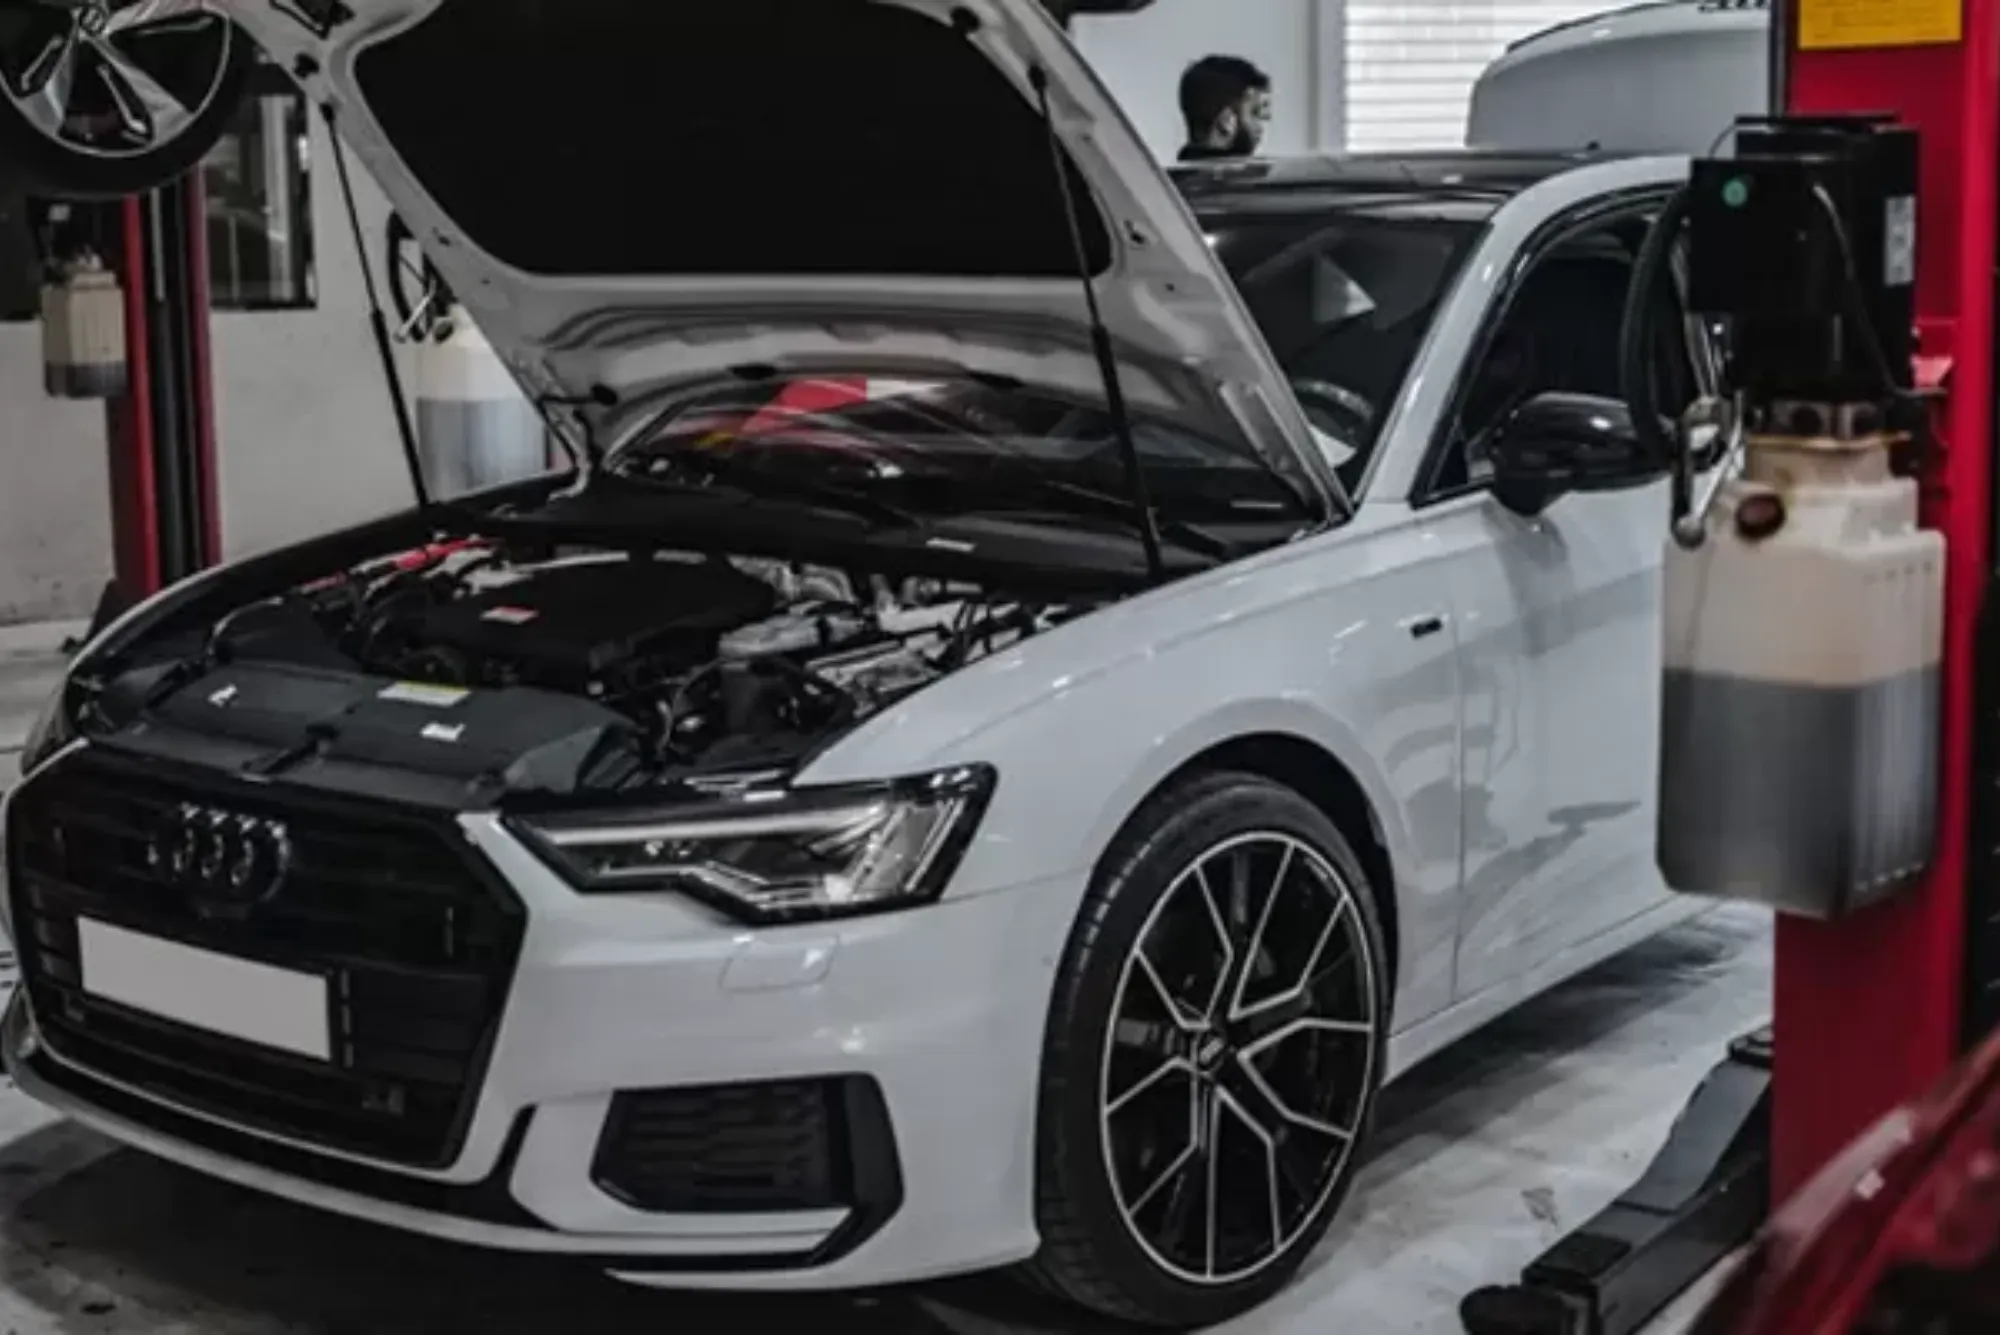 Audi Maintenance Tips